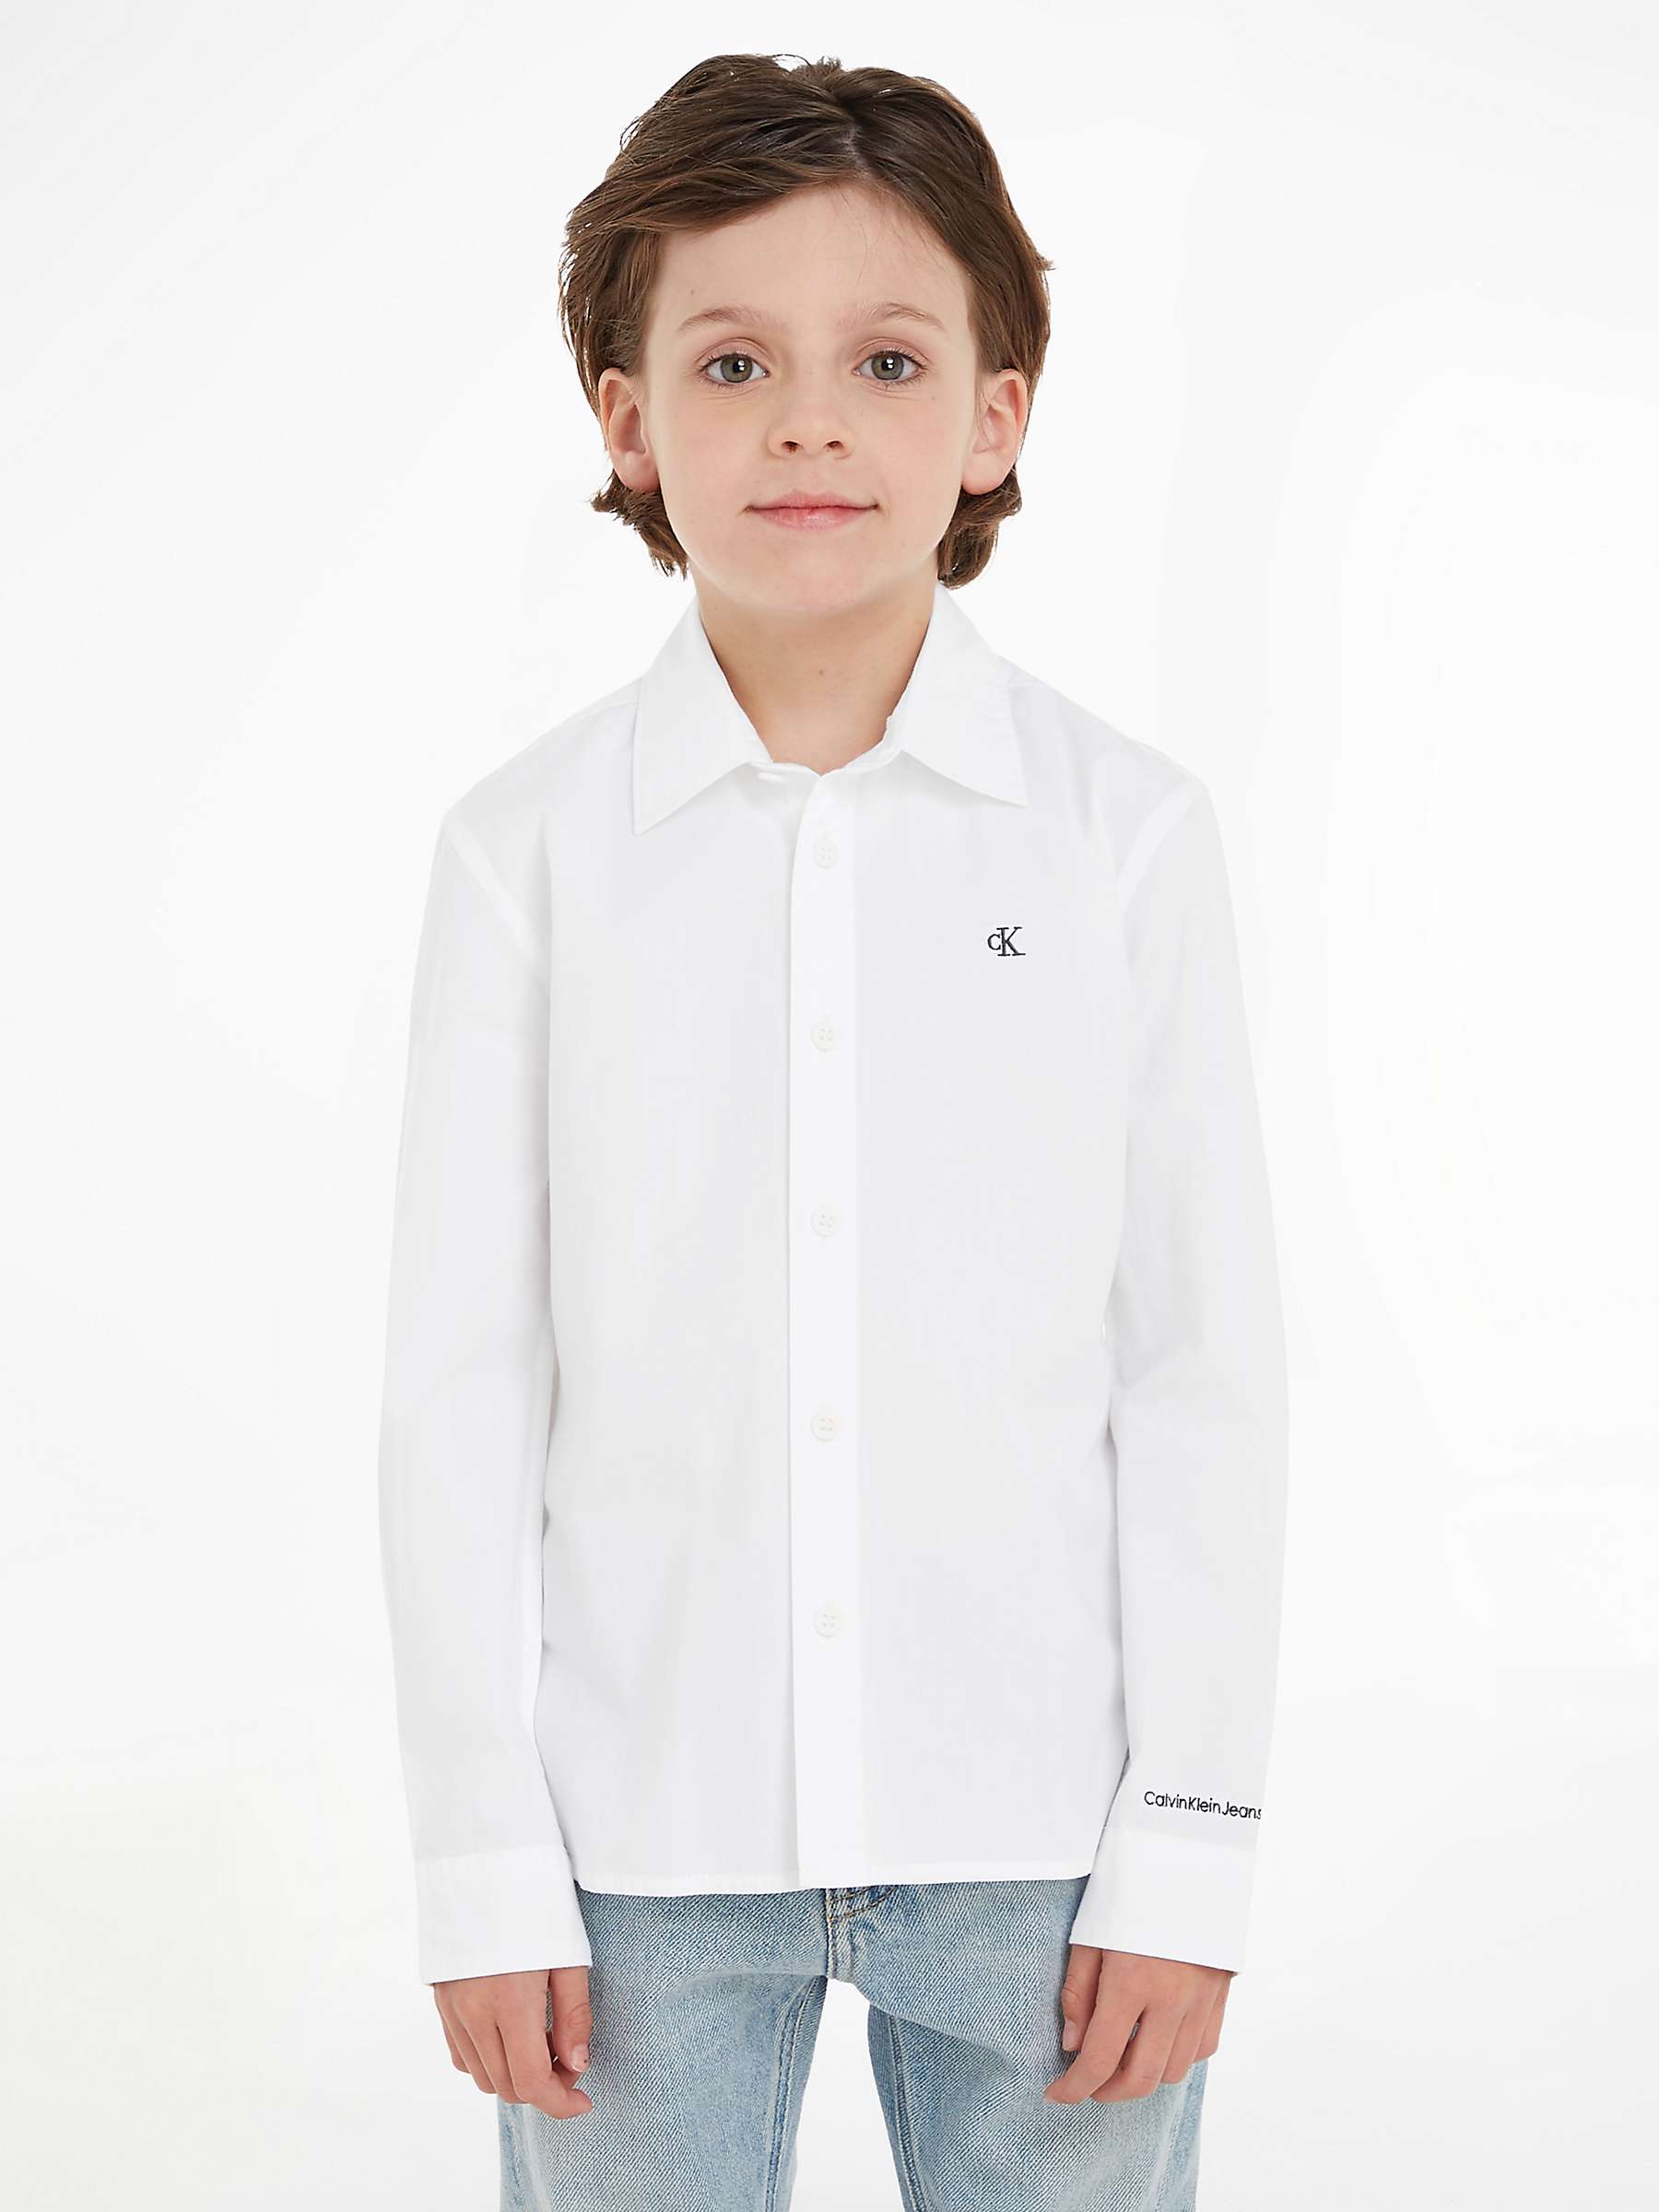 Calvin Klein Kids' Ceremony Shirt, Bright White at John Lewis & Partners